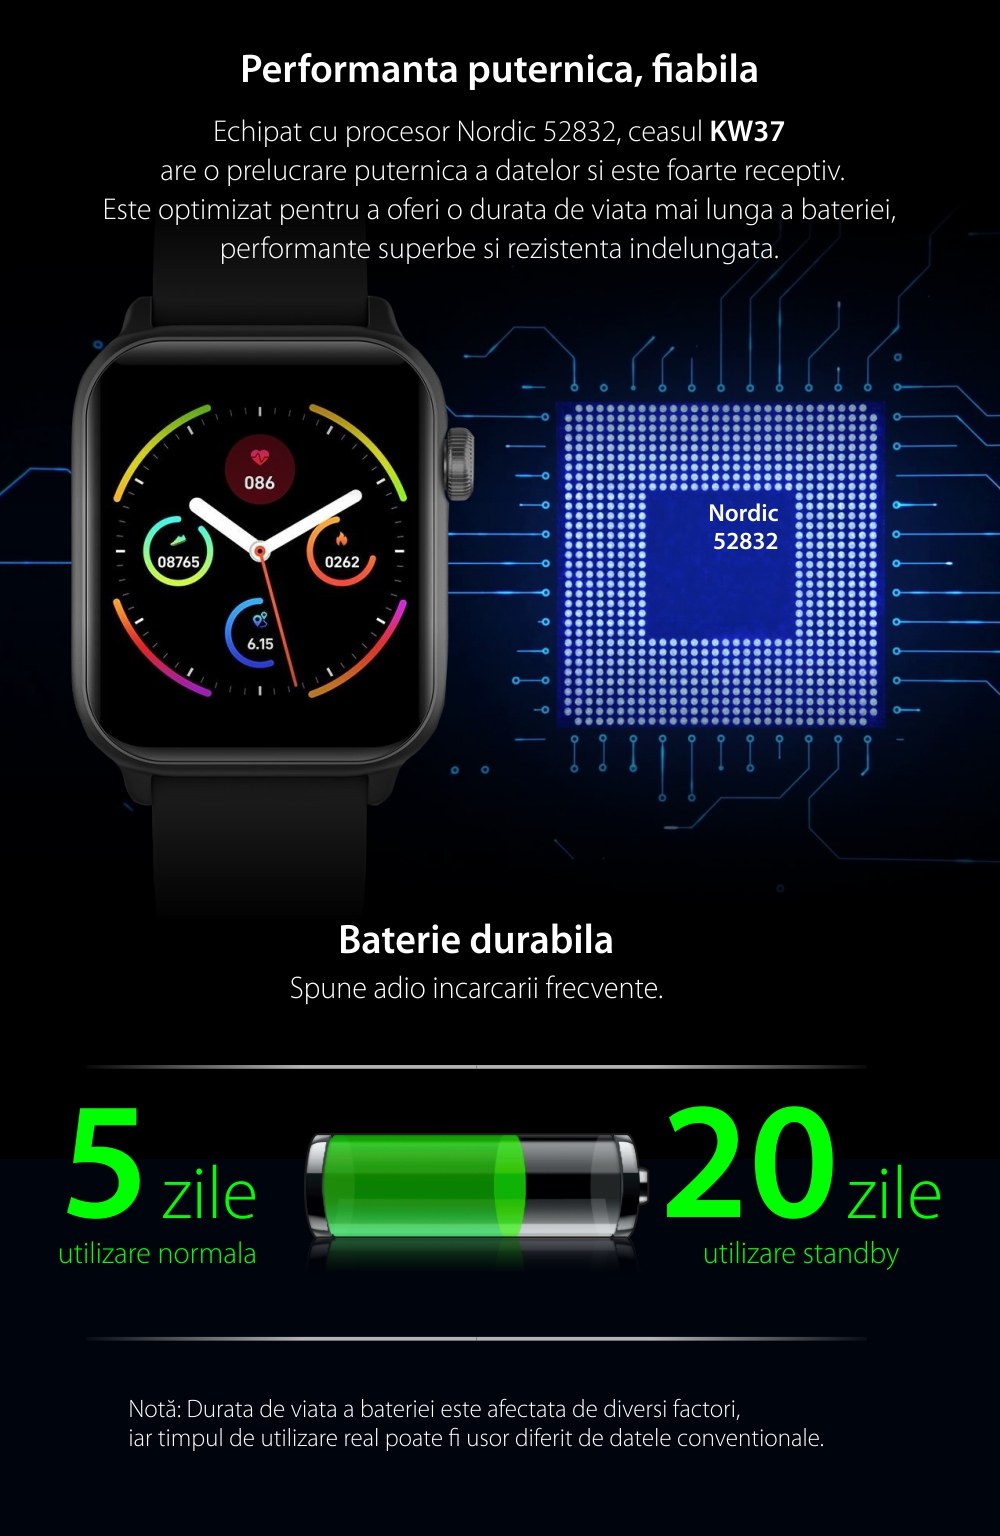 Ceas Smartwatch Twinkler TKY H30 KW37, Verde inchis, Memento sedentar, Termometru, Monitorizarea somnului